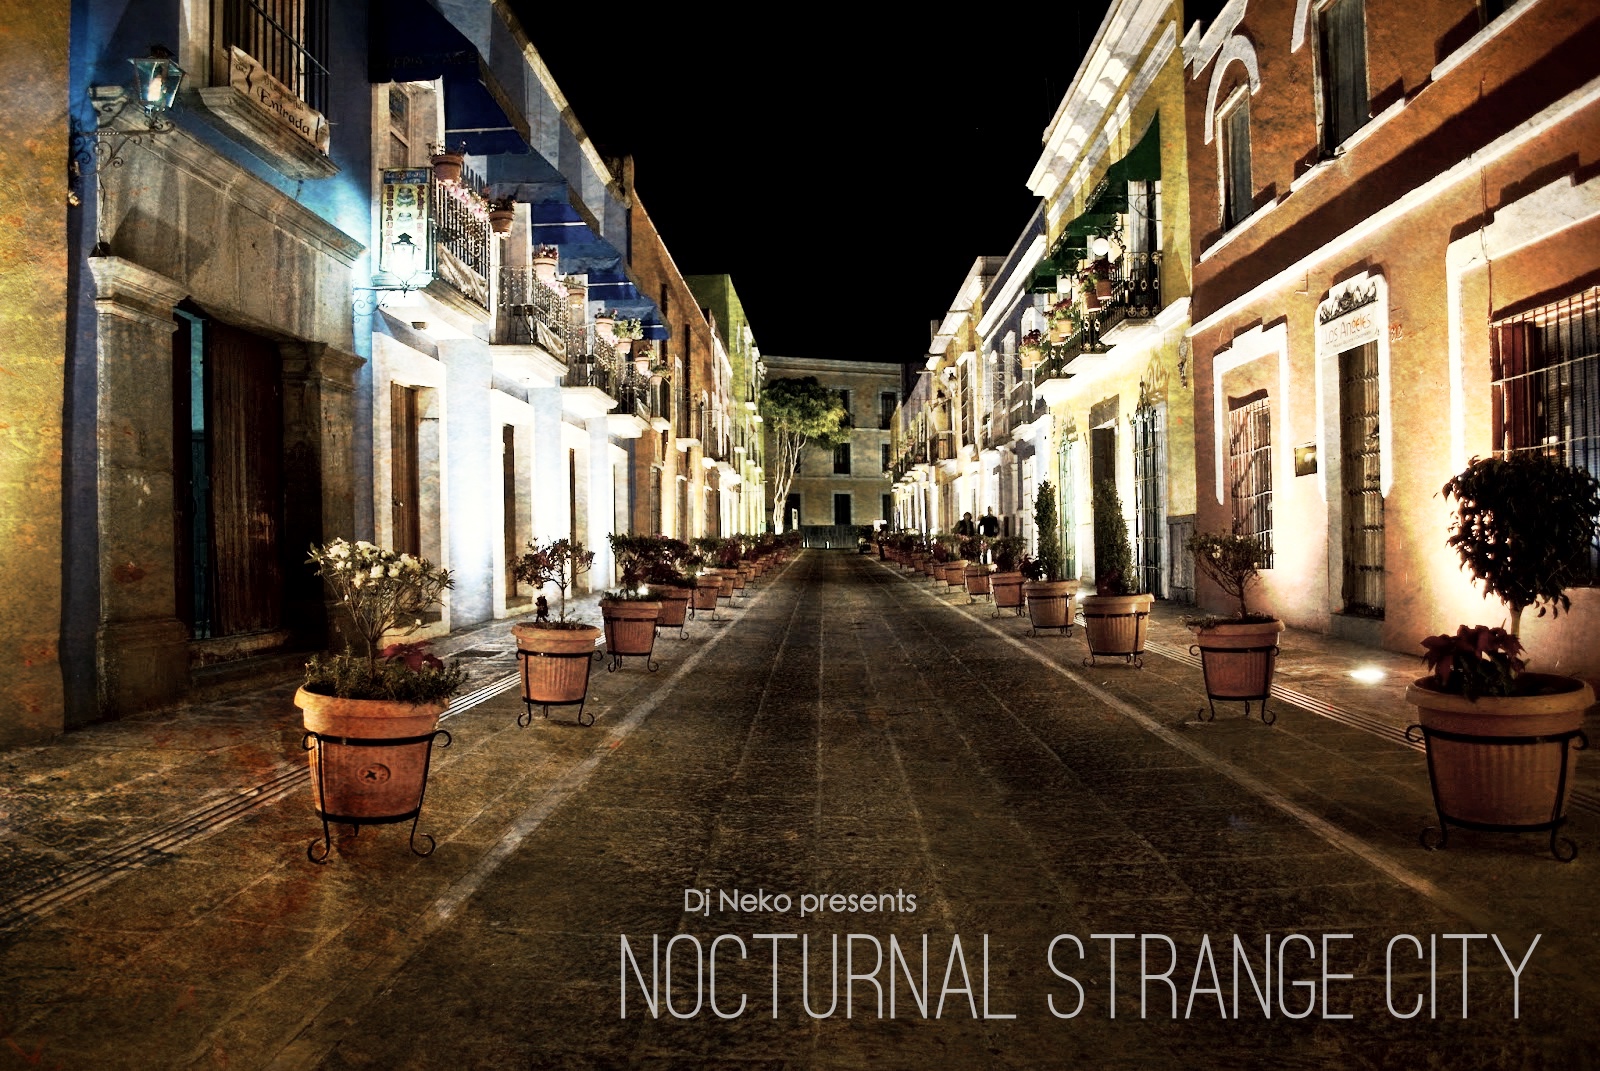 Nocturnal Strange City by Dj Neko